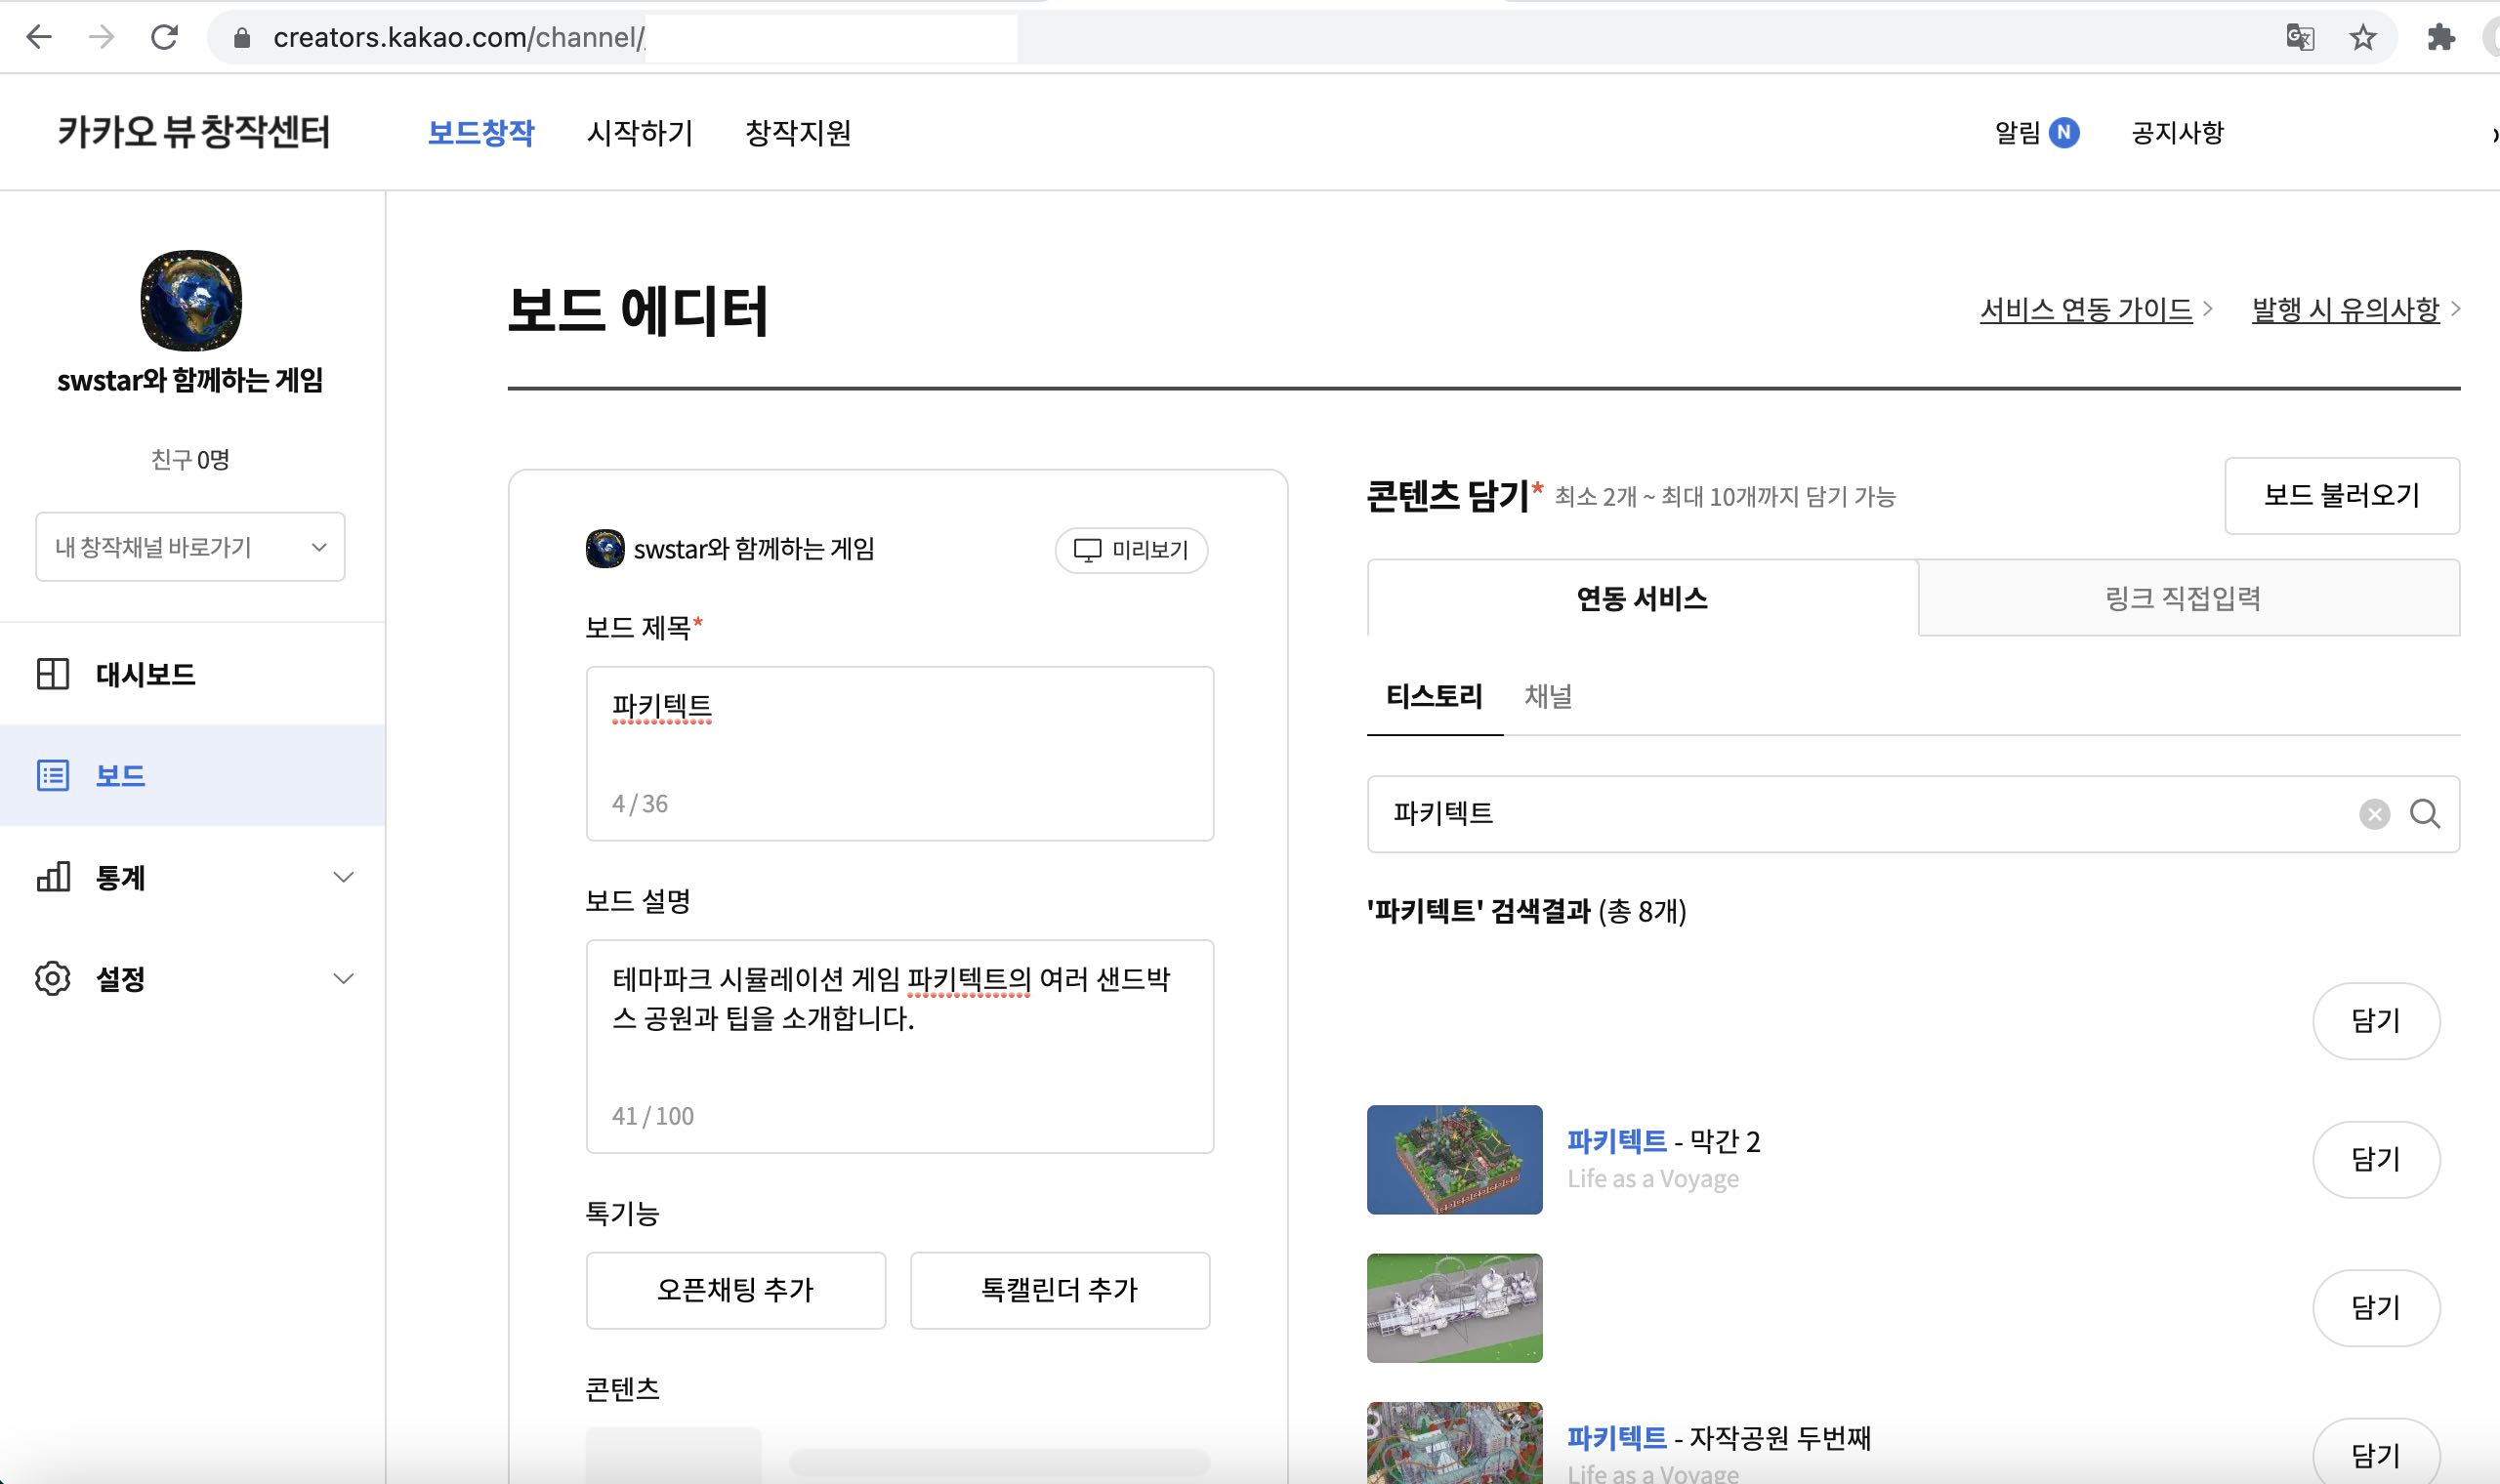 screenshot of Kakao View creation center, showing board editor